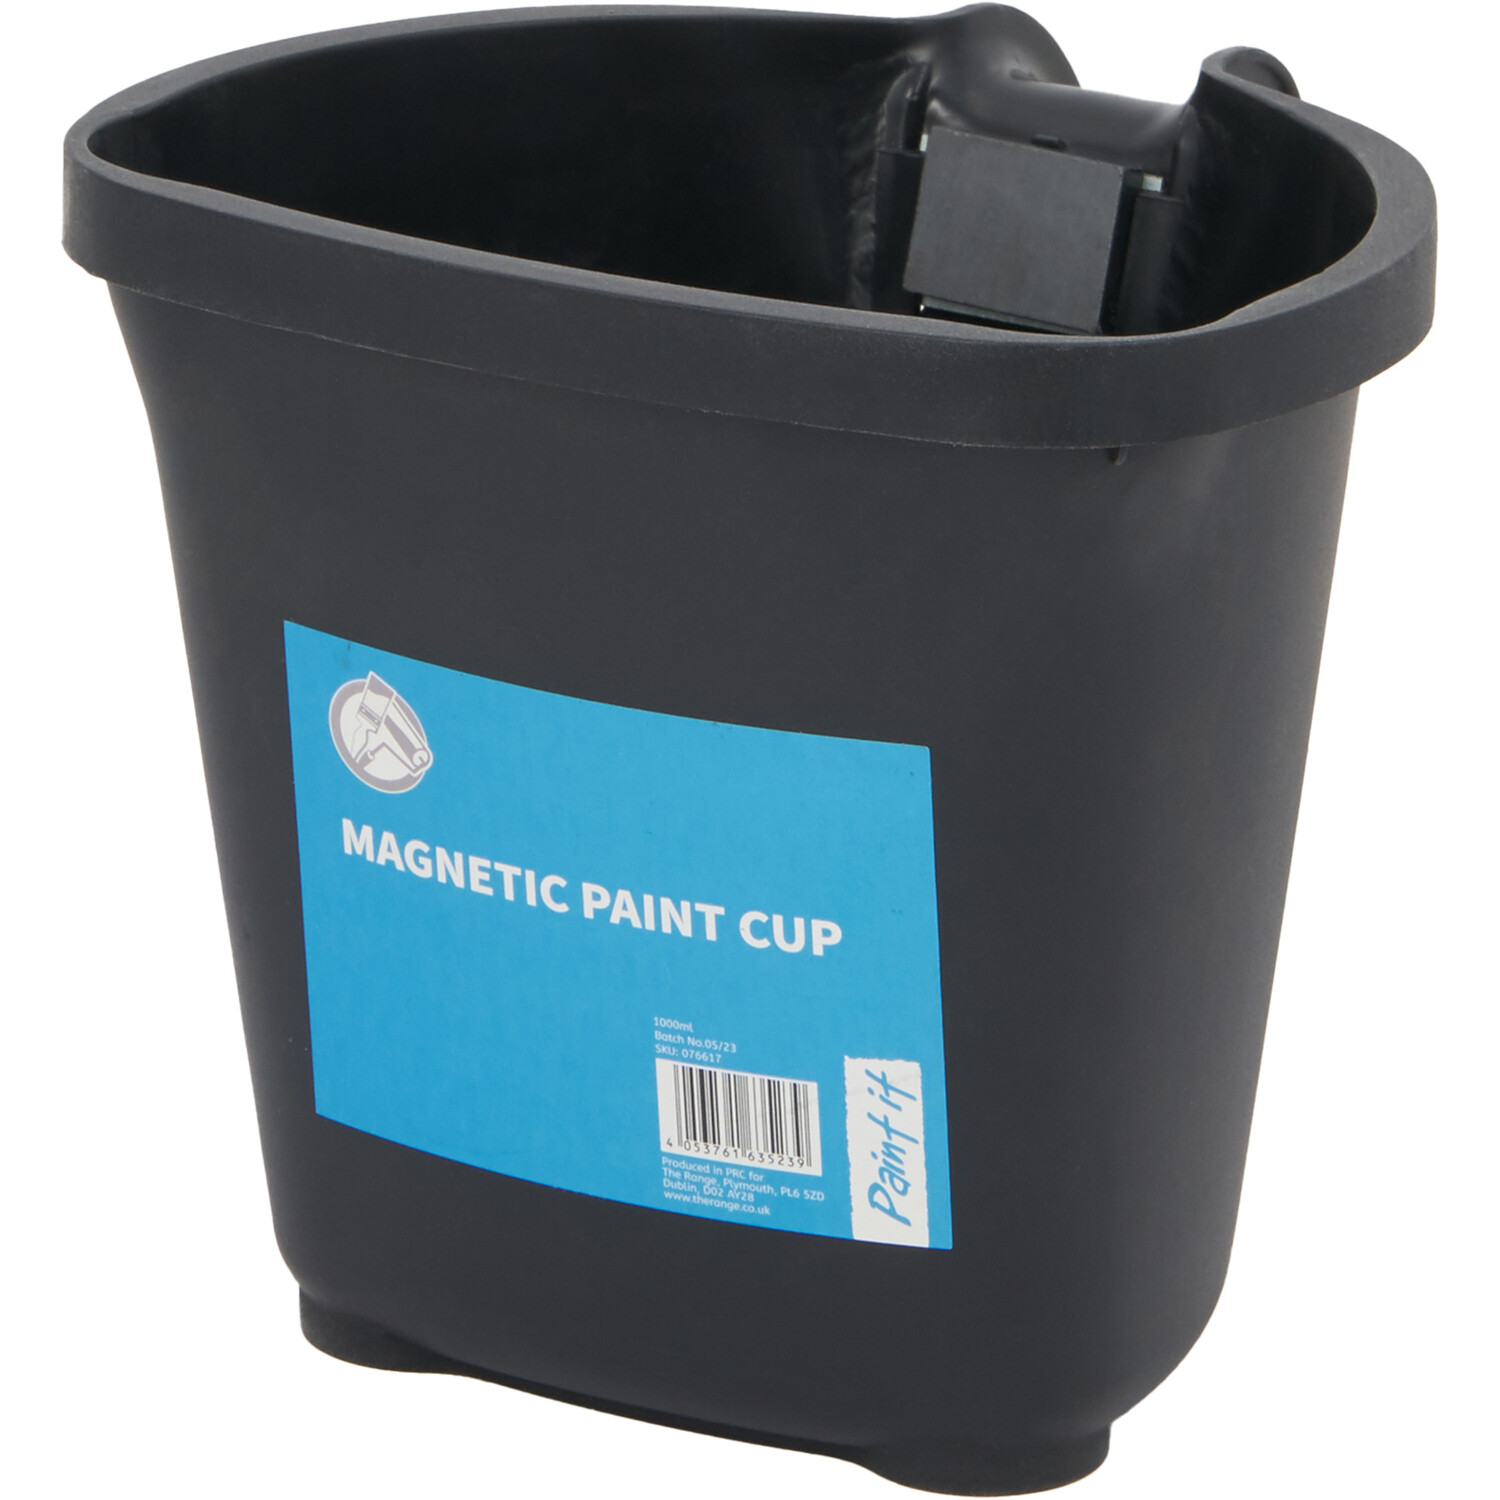 Magnetic Paint Cup - Black Image 1